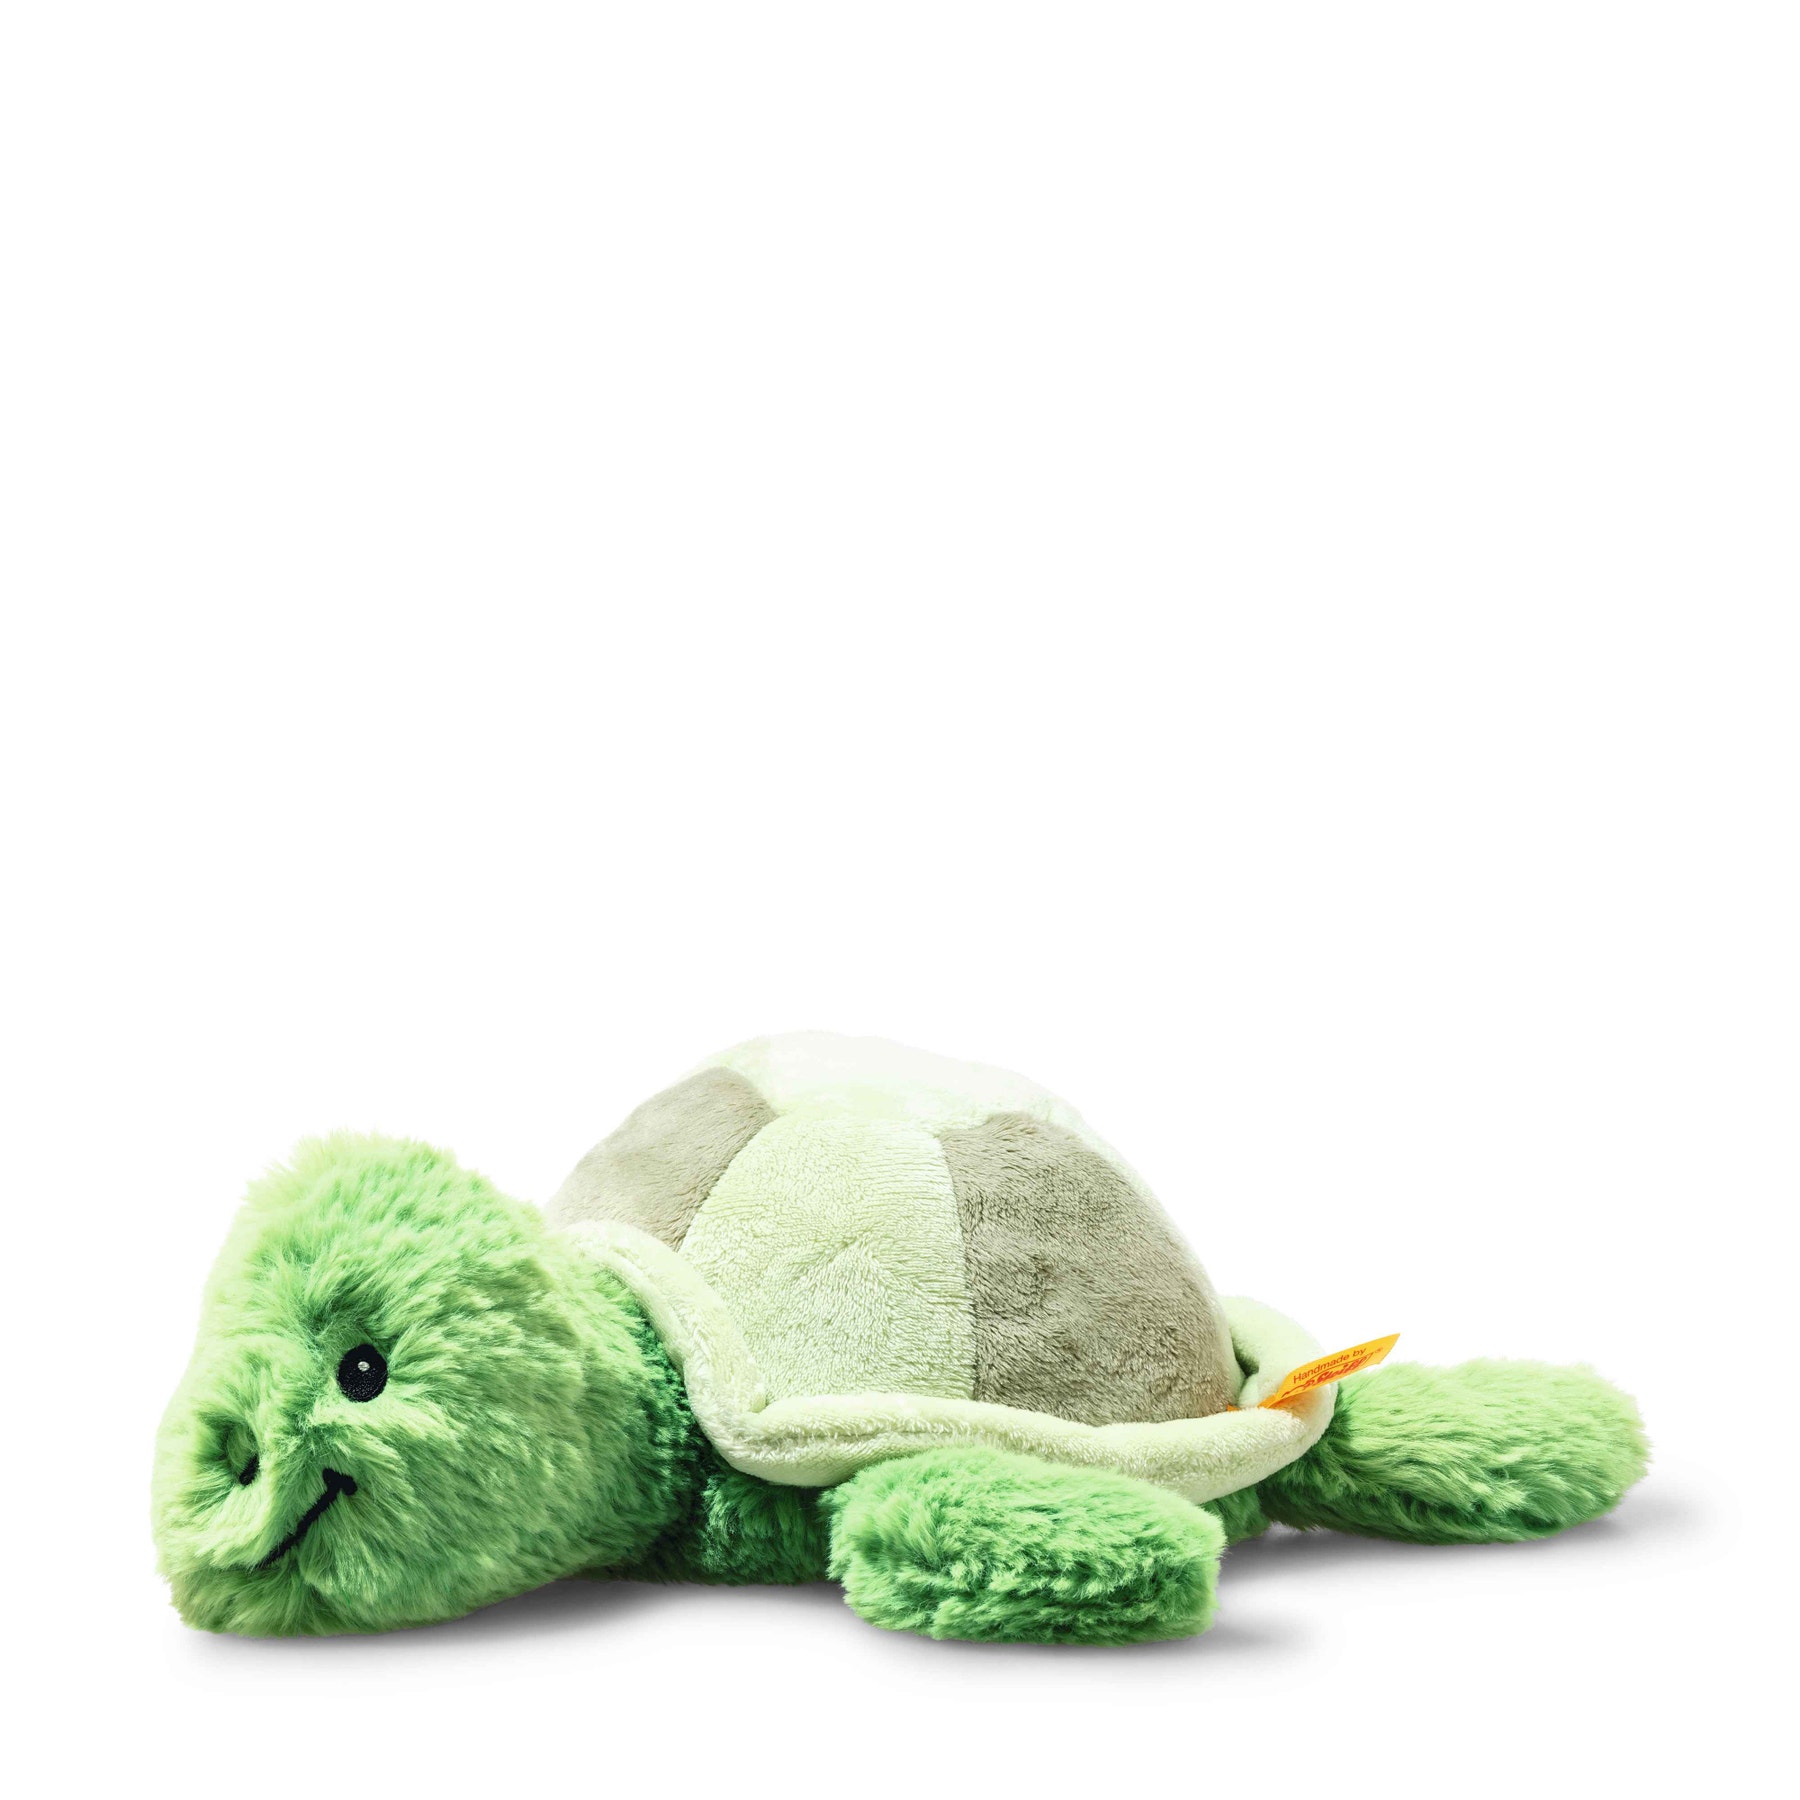 Tuggy tortoise